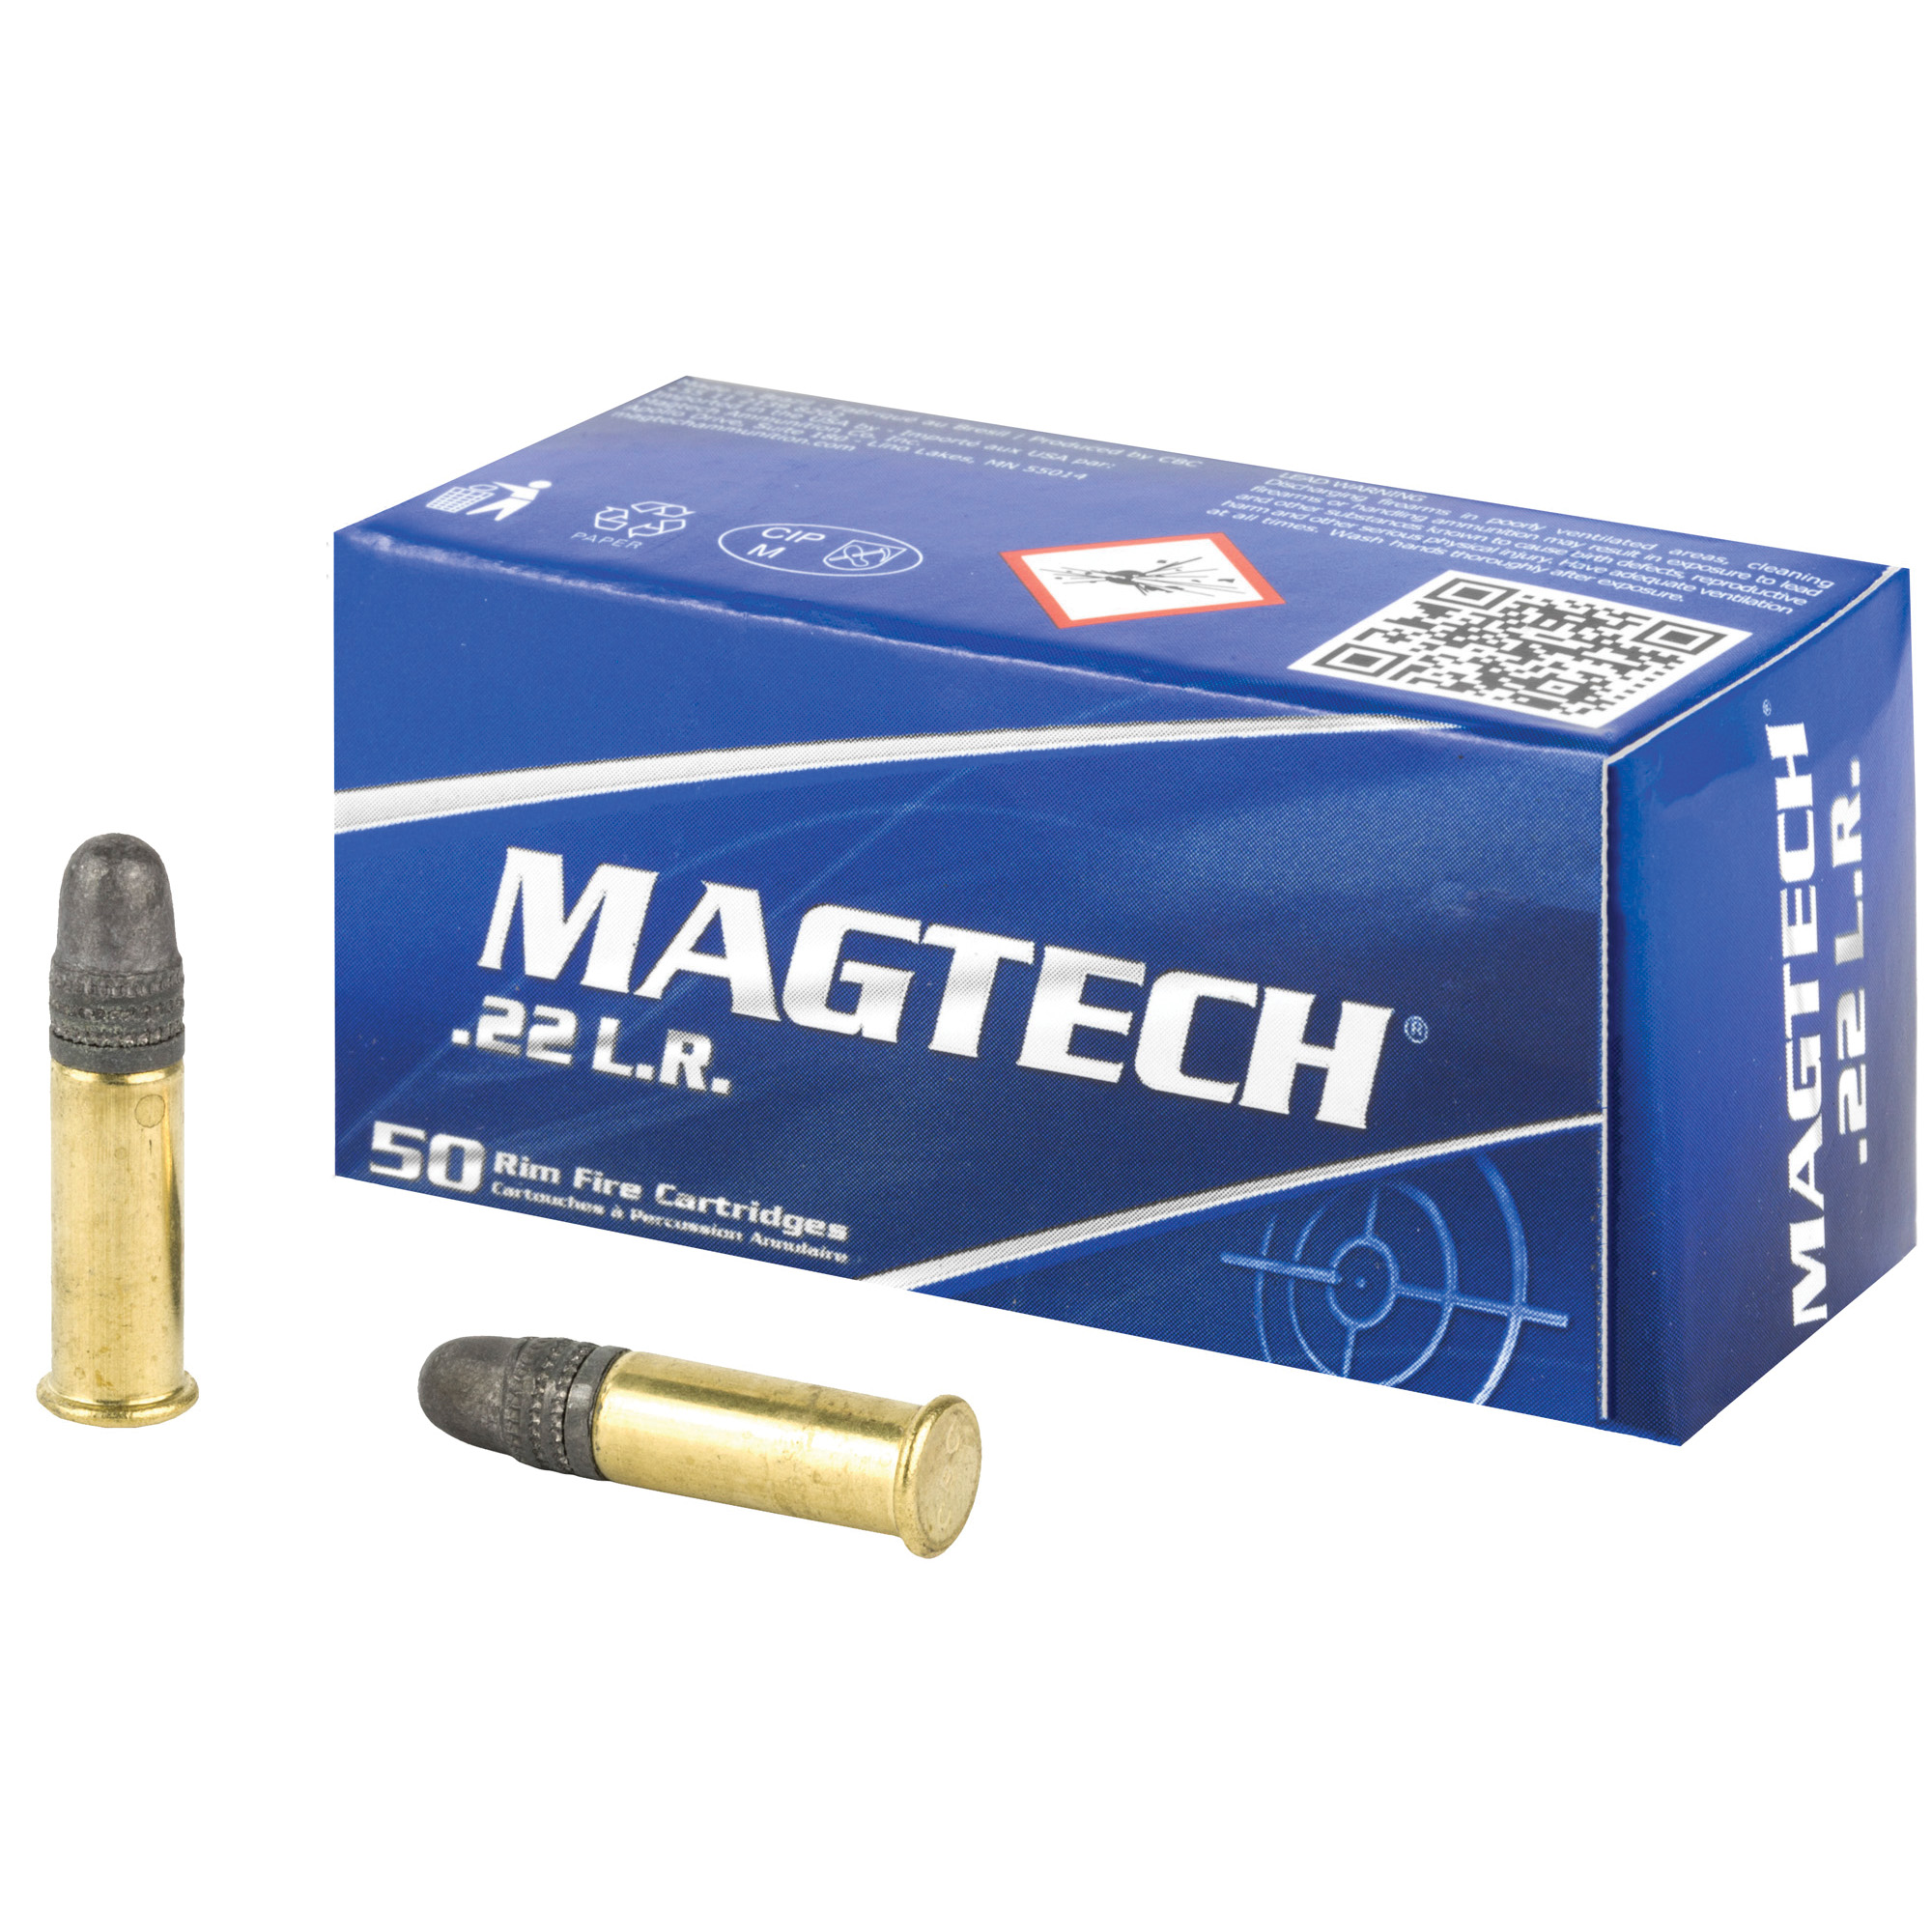 Magtech .22 LR Rimfire Ammunition 40 Grain 5000-Round (Case-Pack) Lead Round Nose 22b, UPC: 754908184903